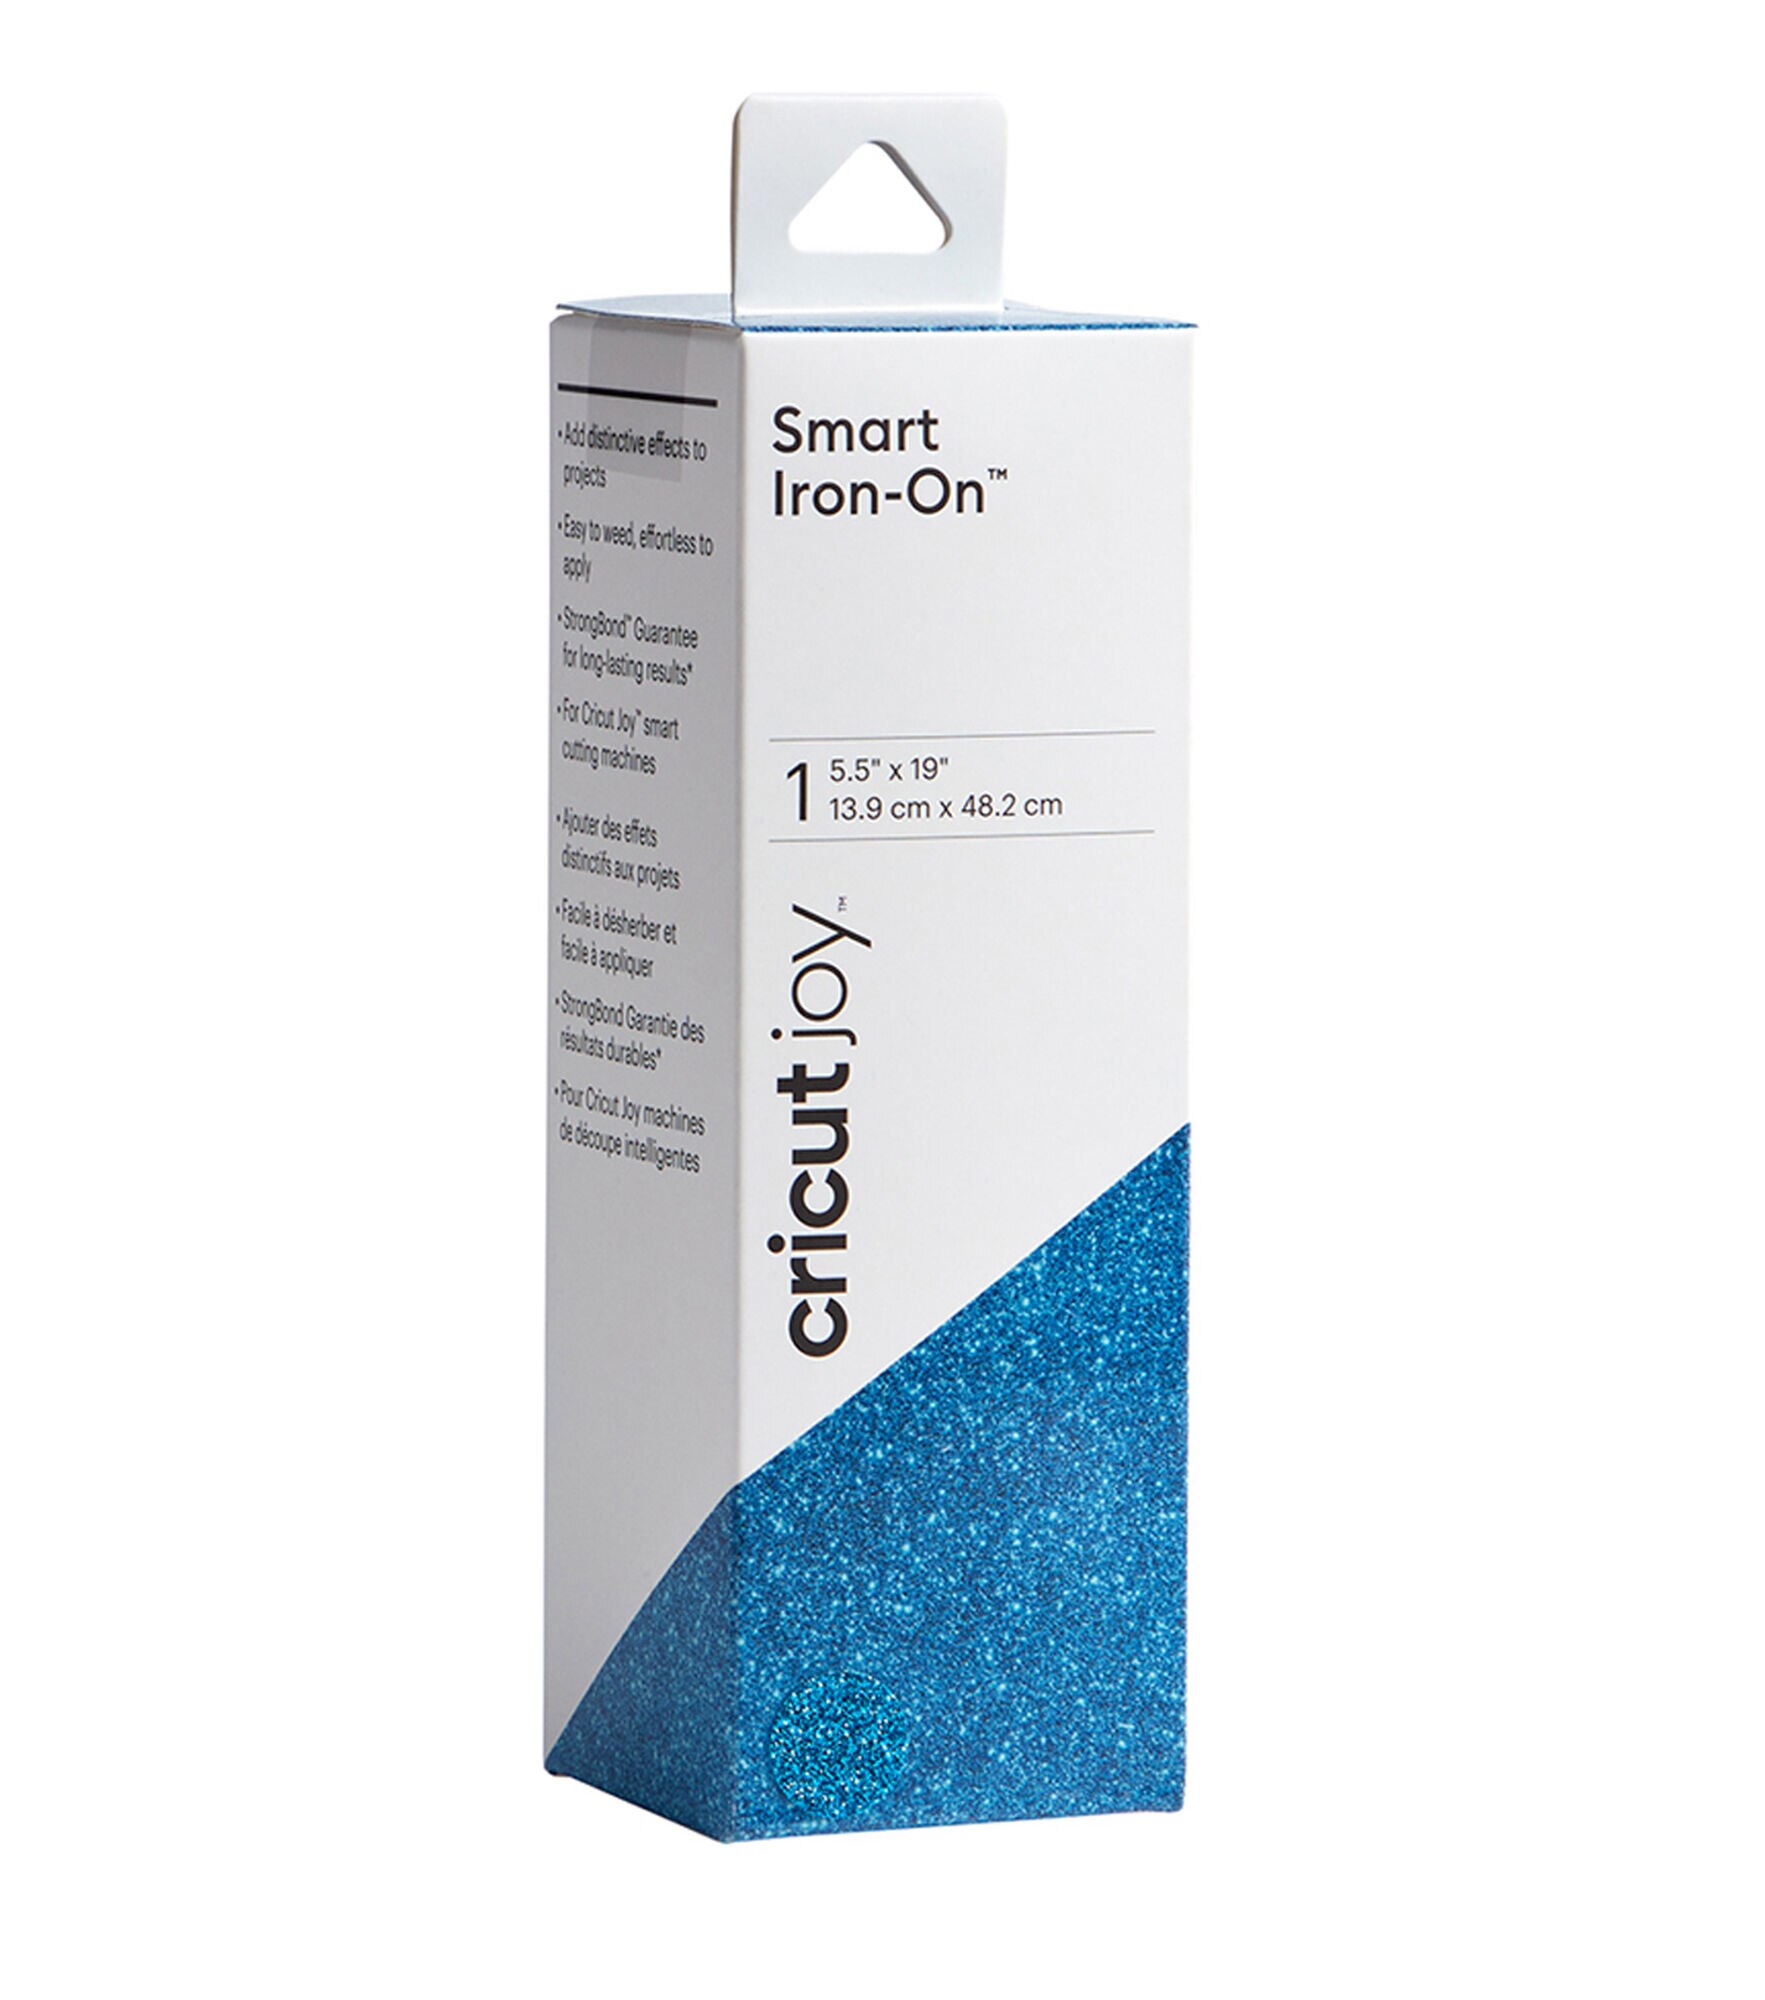 Cricut Joy 5.5" x 19" Glitter Smart Iron On Roll, Aqua Glitter, hi-res